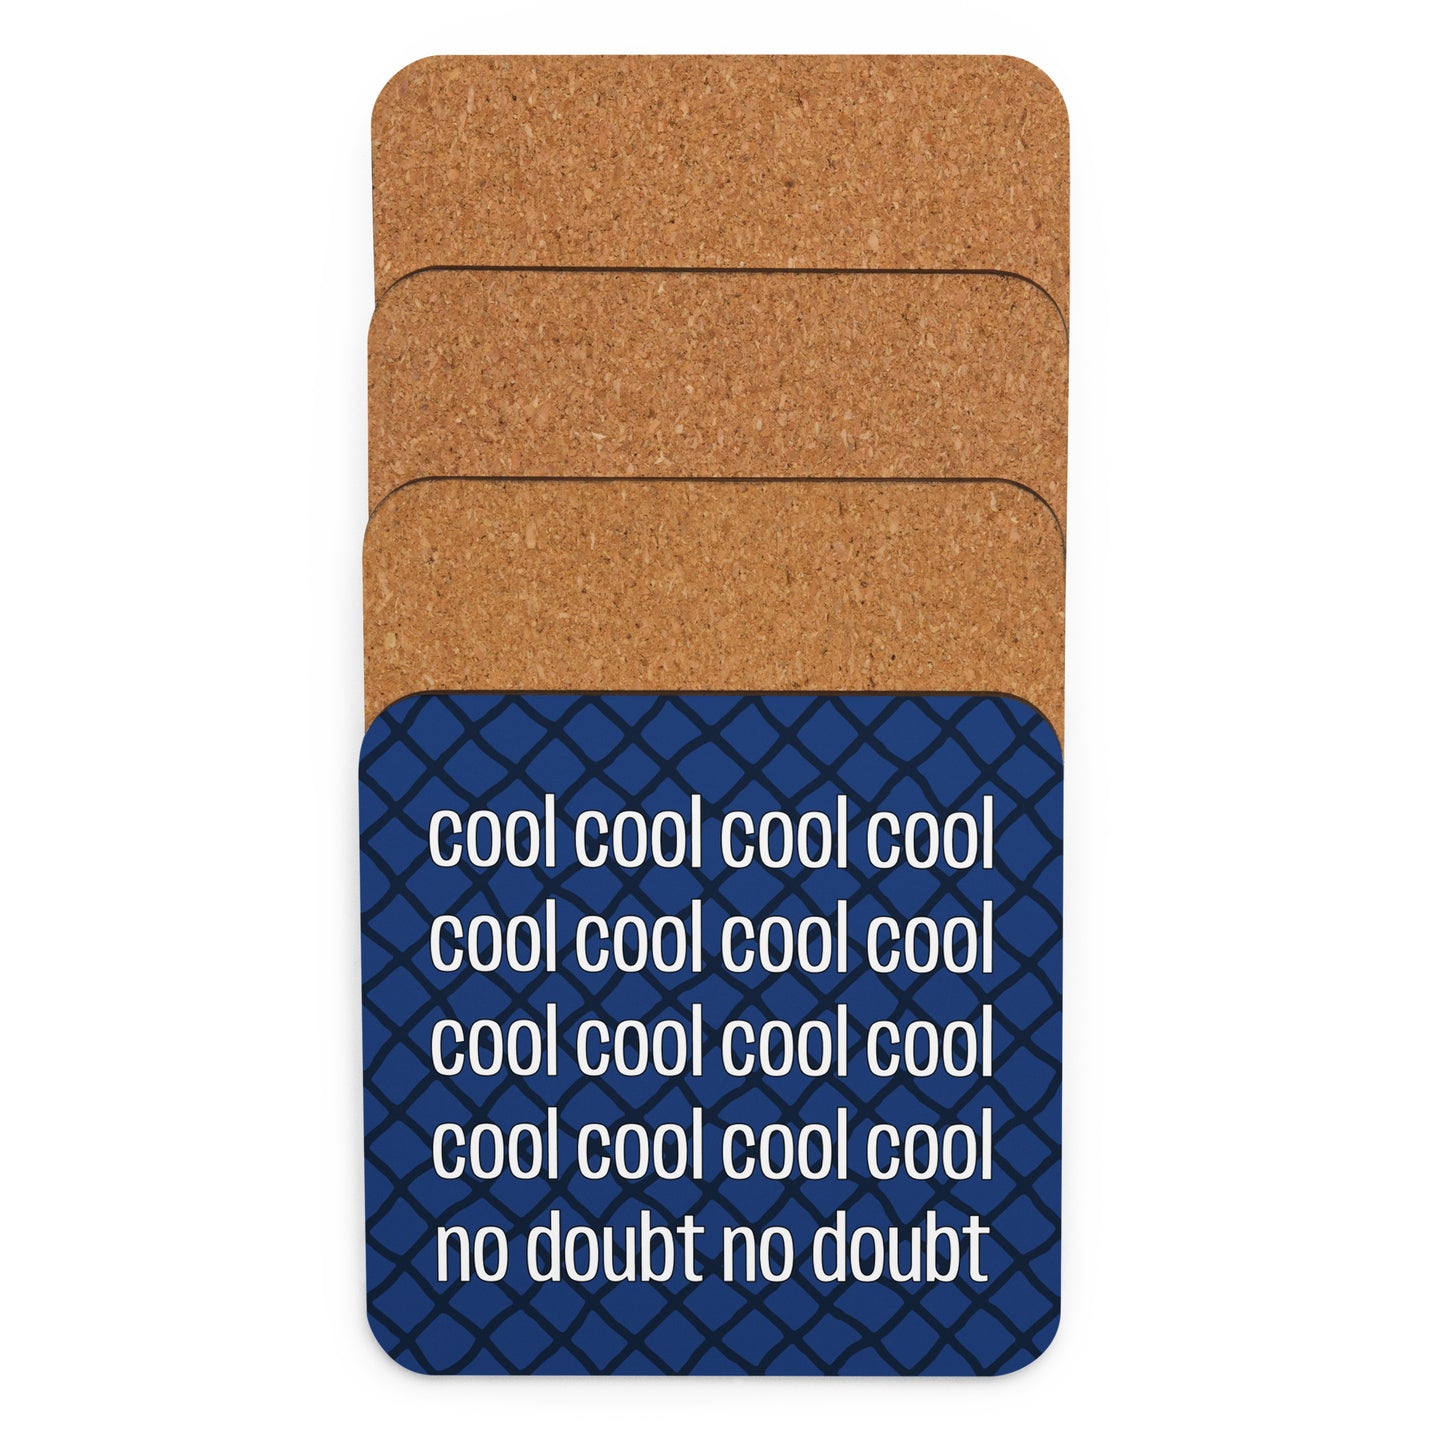 Cool Cool Cool Cool Cork-back coaster